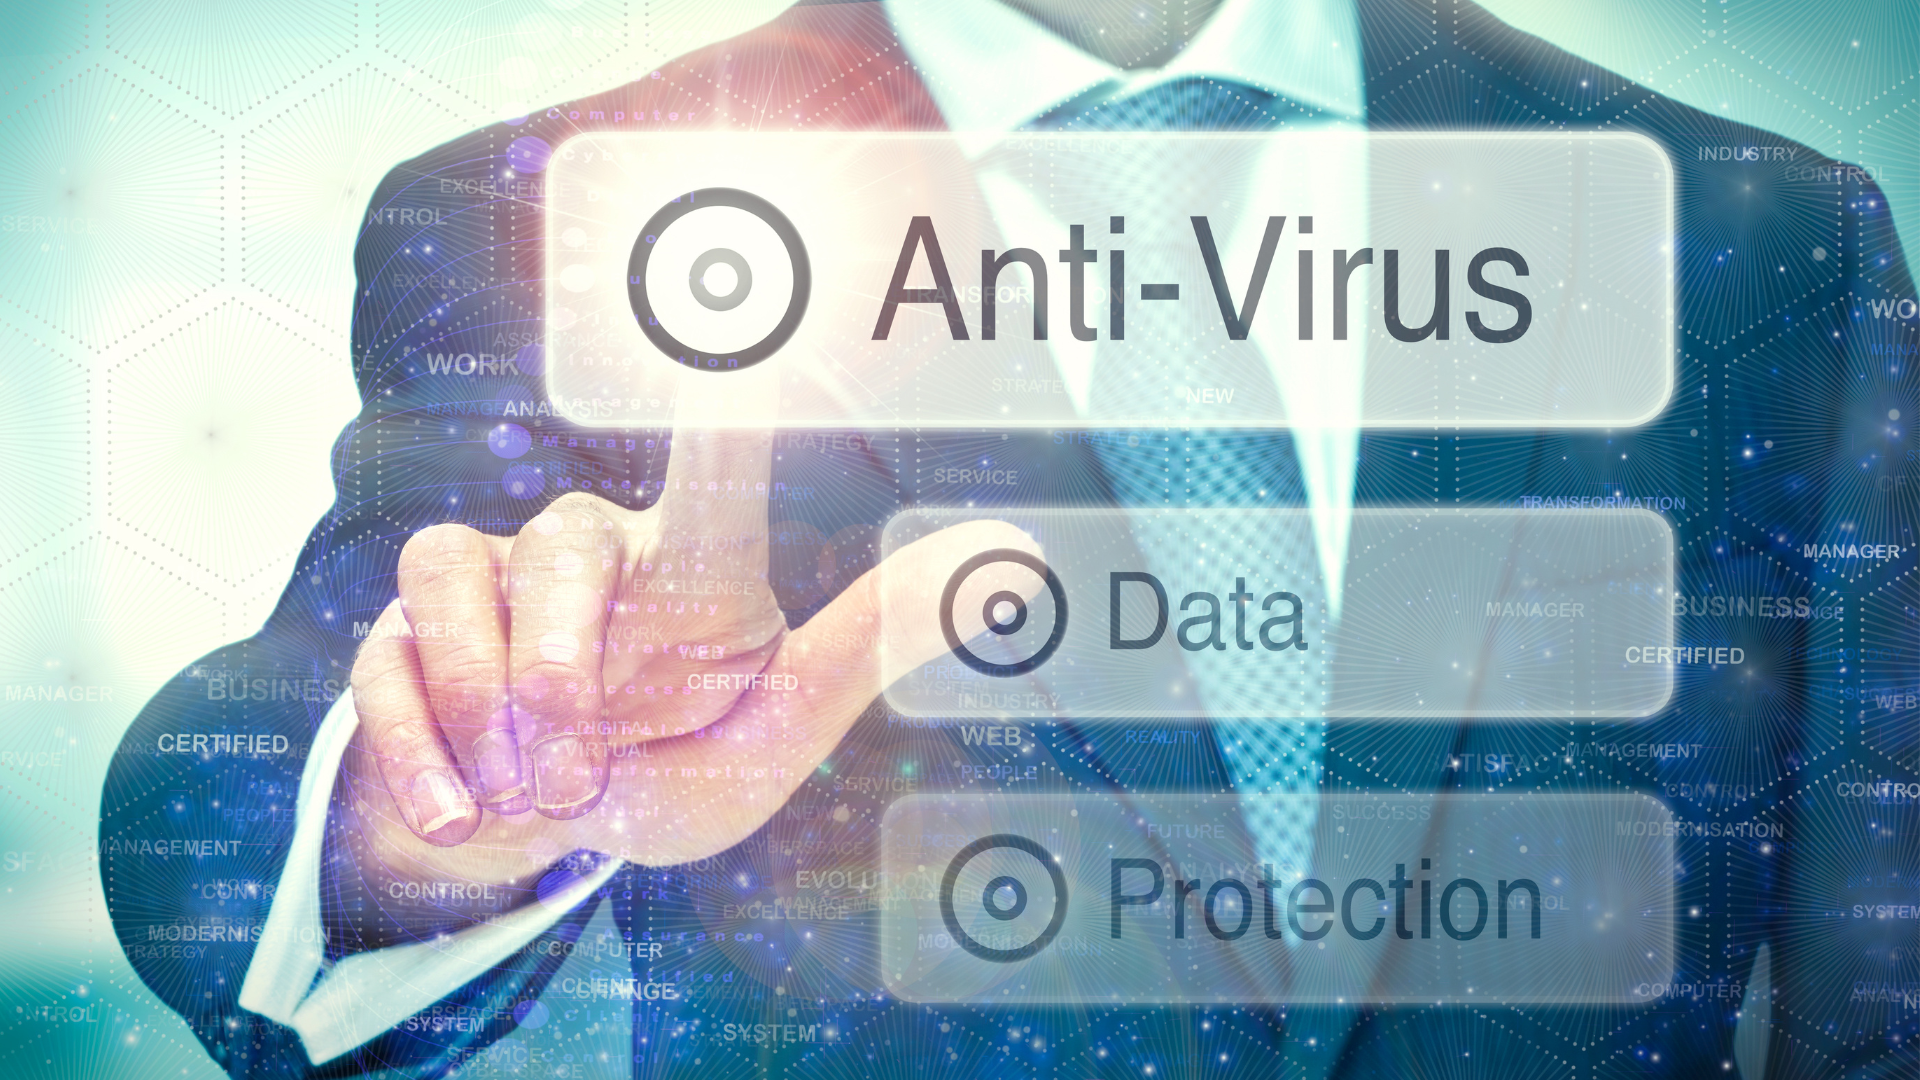 Teaserbild Antivirus Blogbeitrag